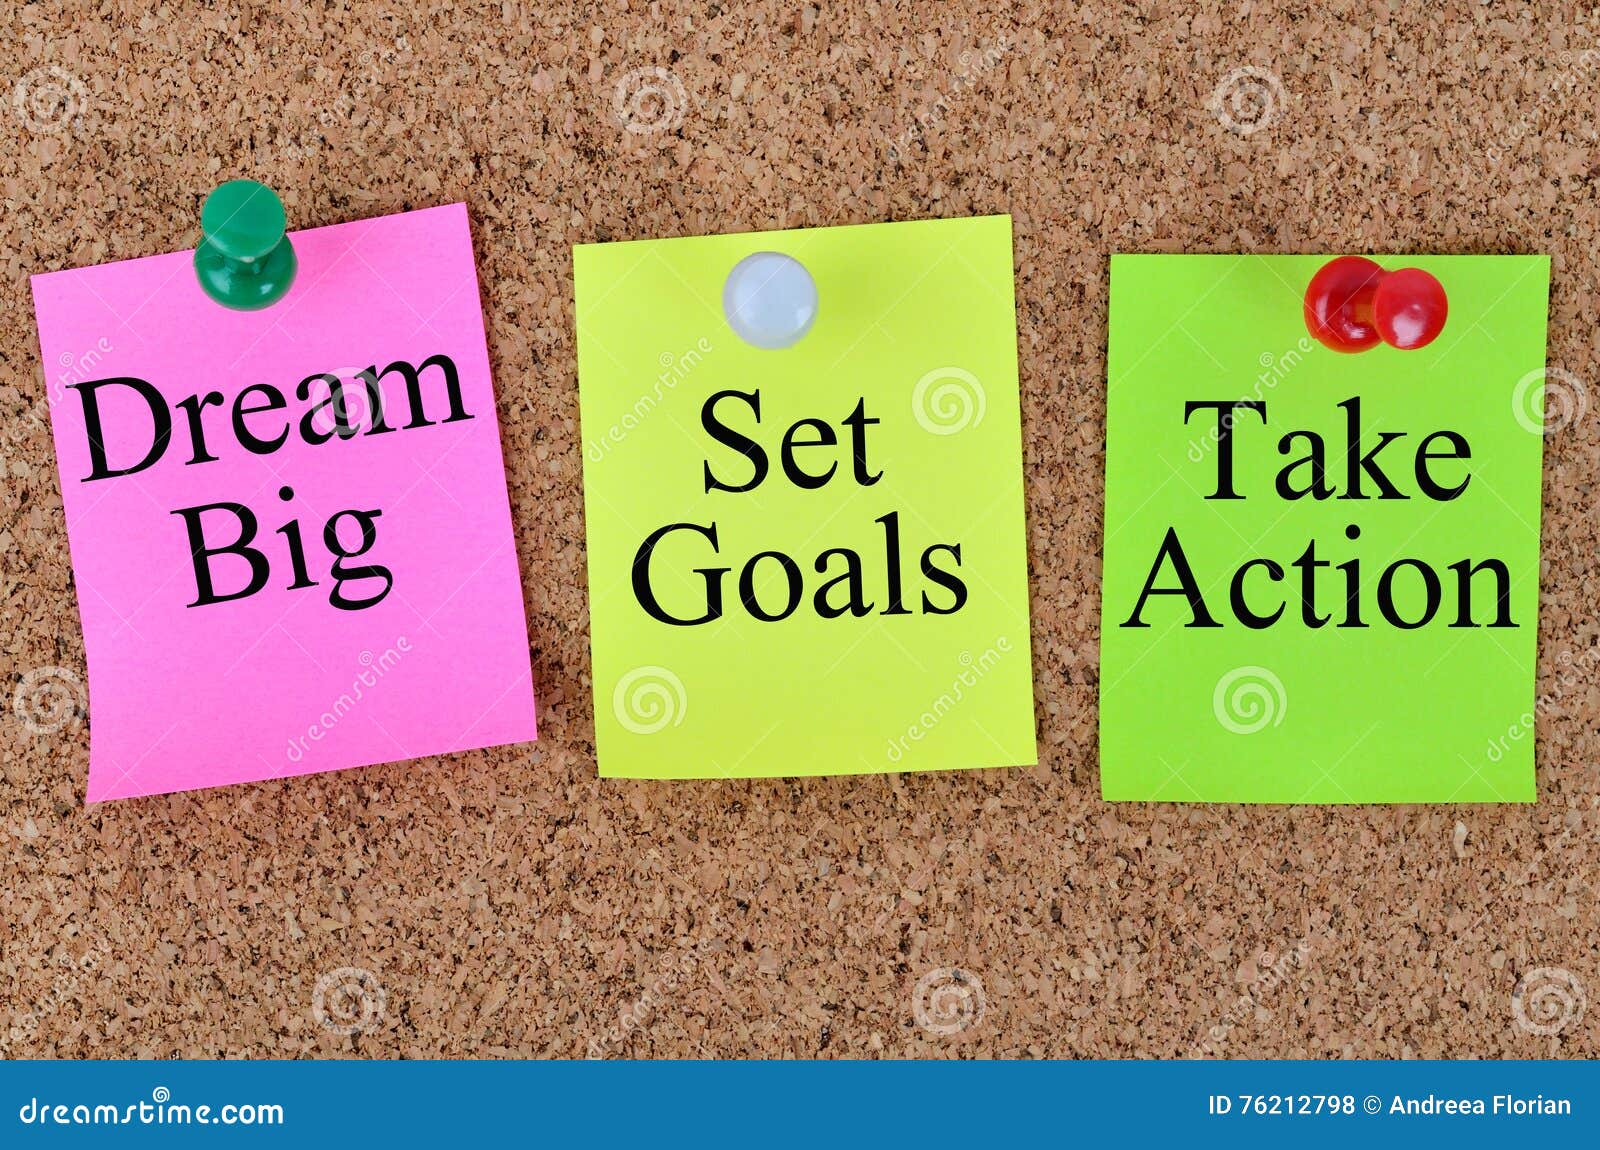 dream big set goals take action written on notes